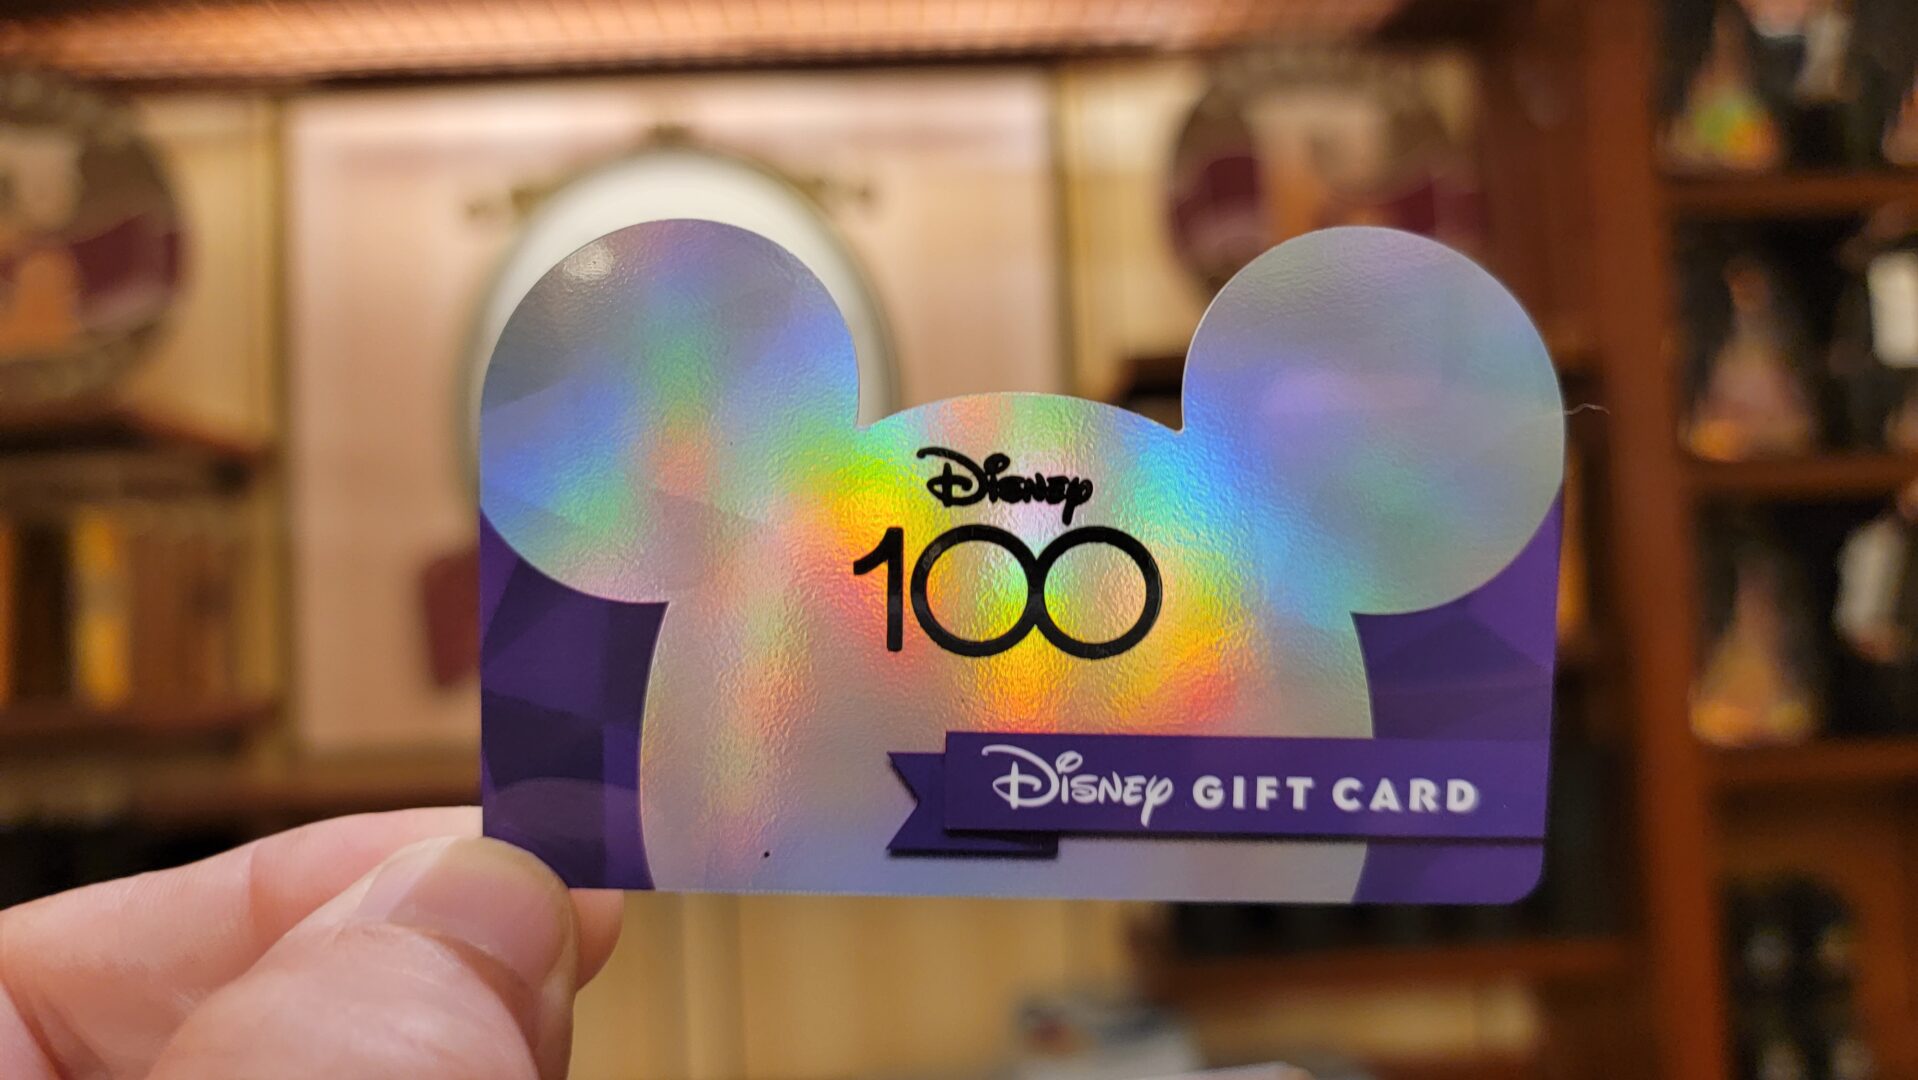 New Disney100 Gift Card Shows up at Walt Disney World